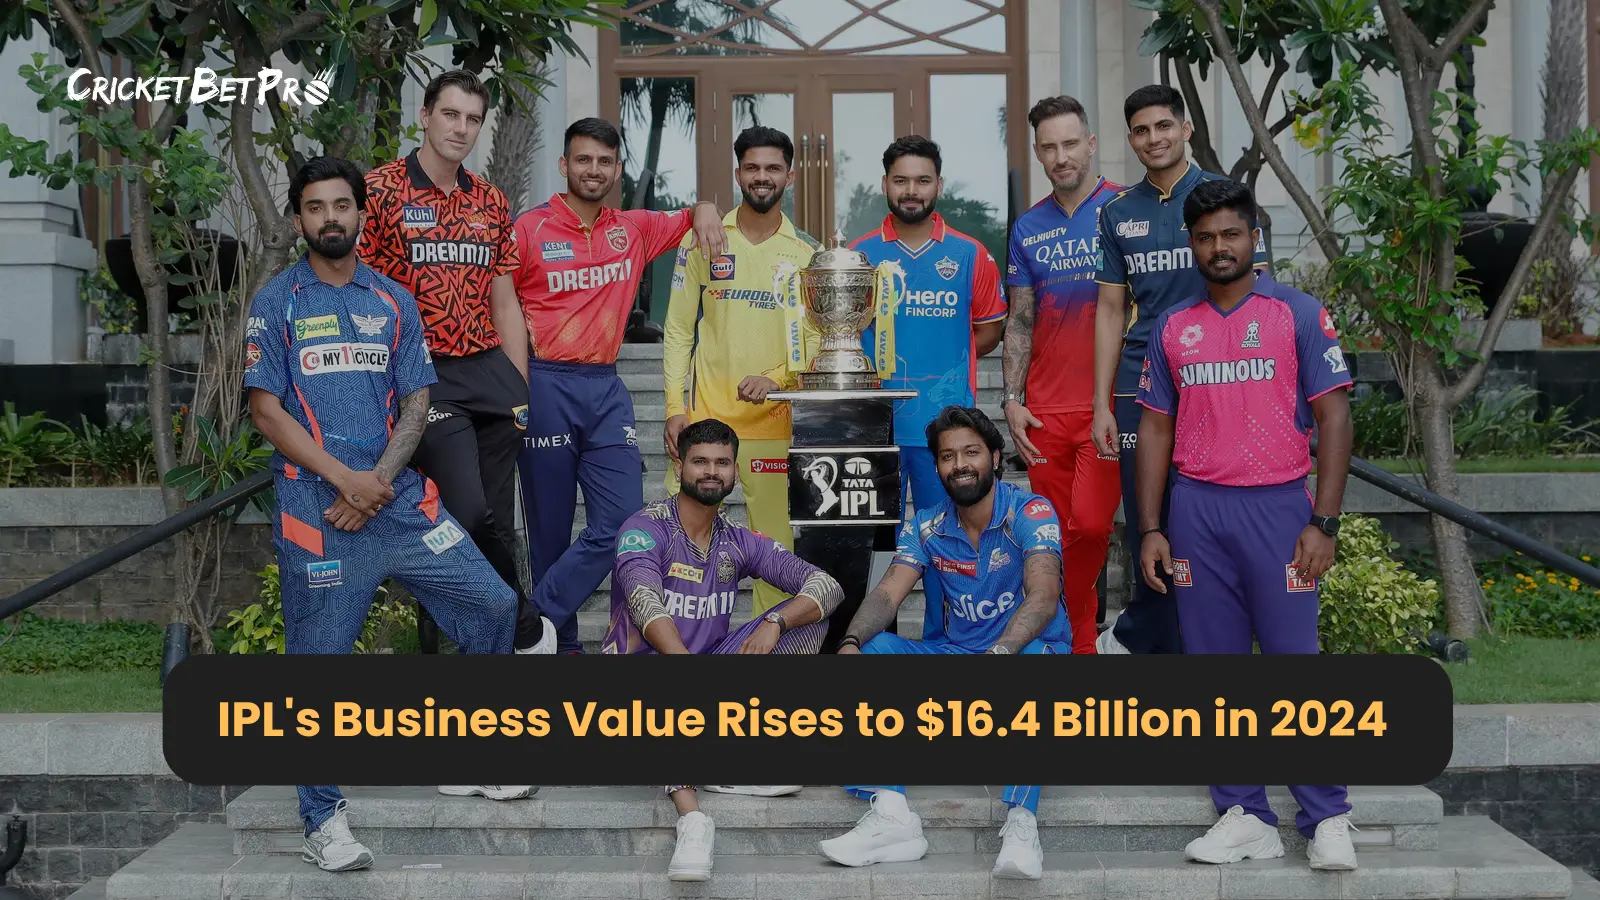 IPL's Business Value Rises